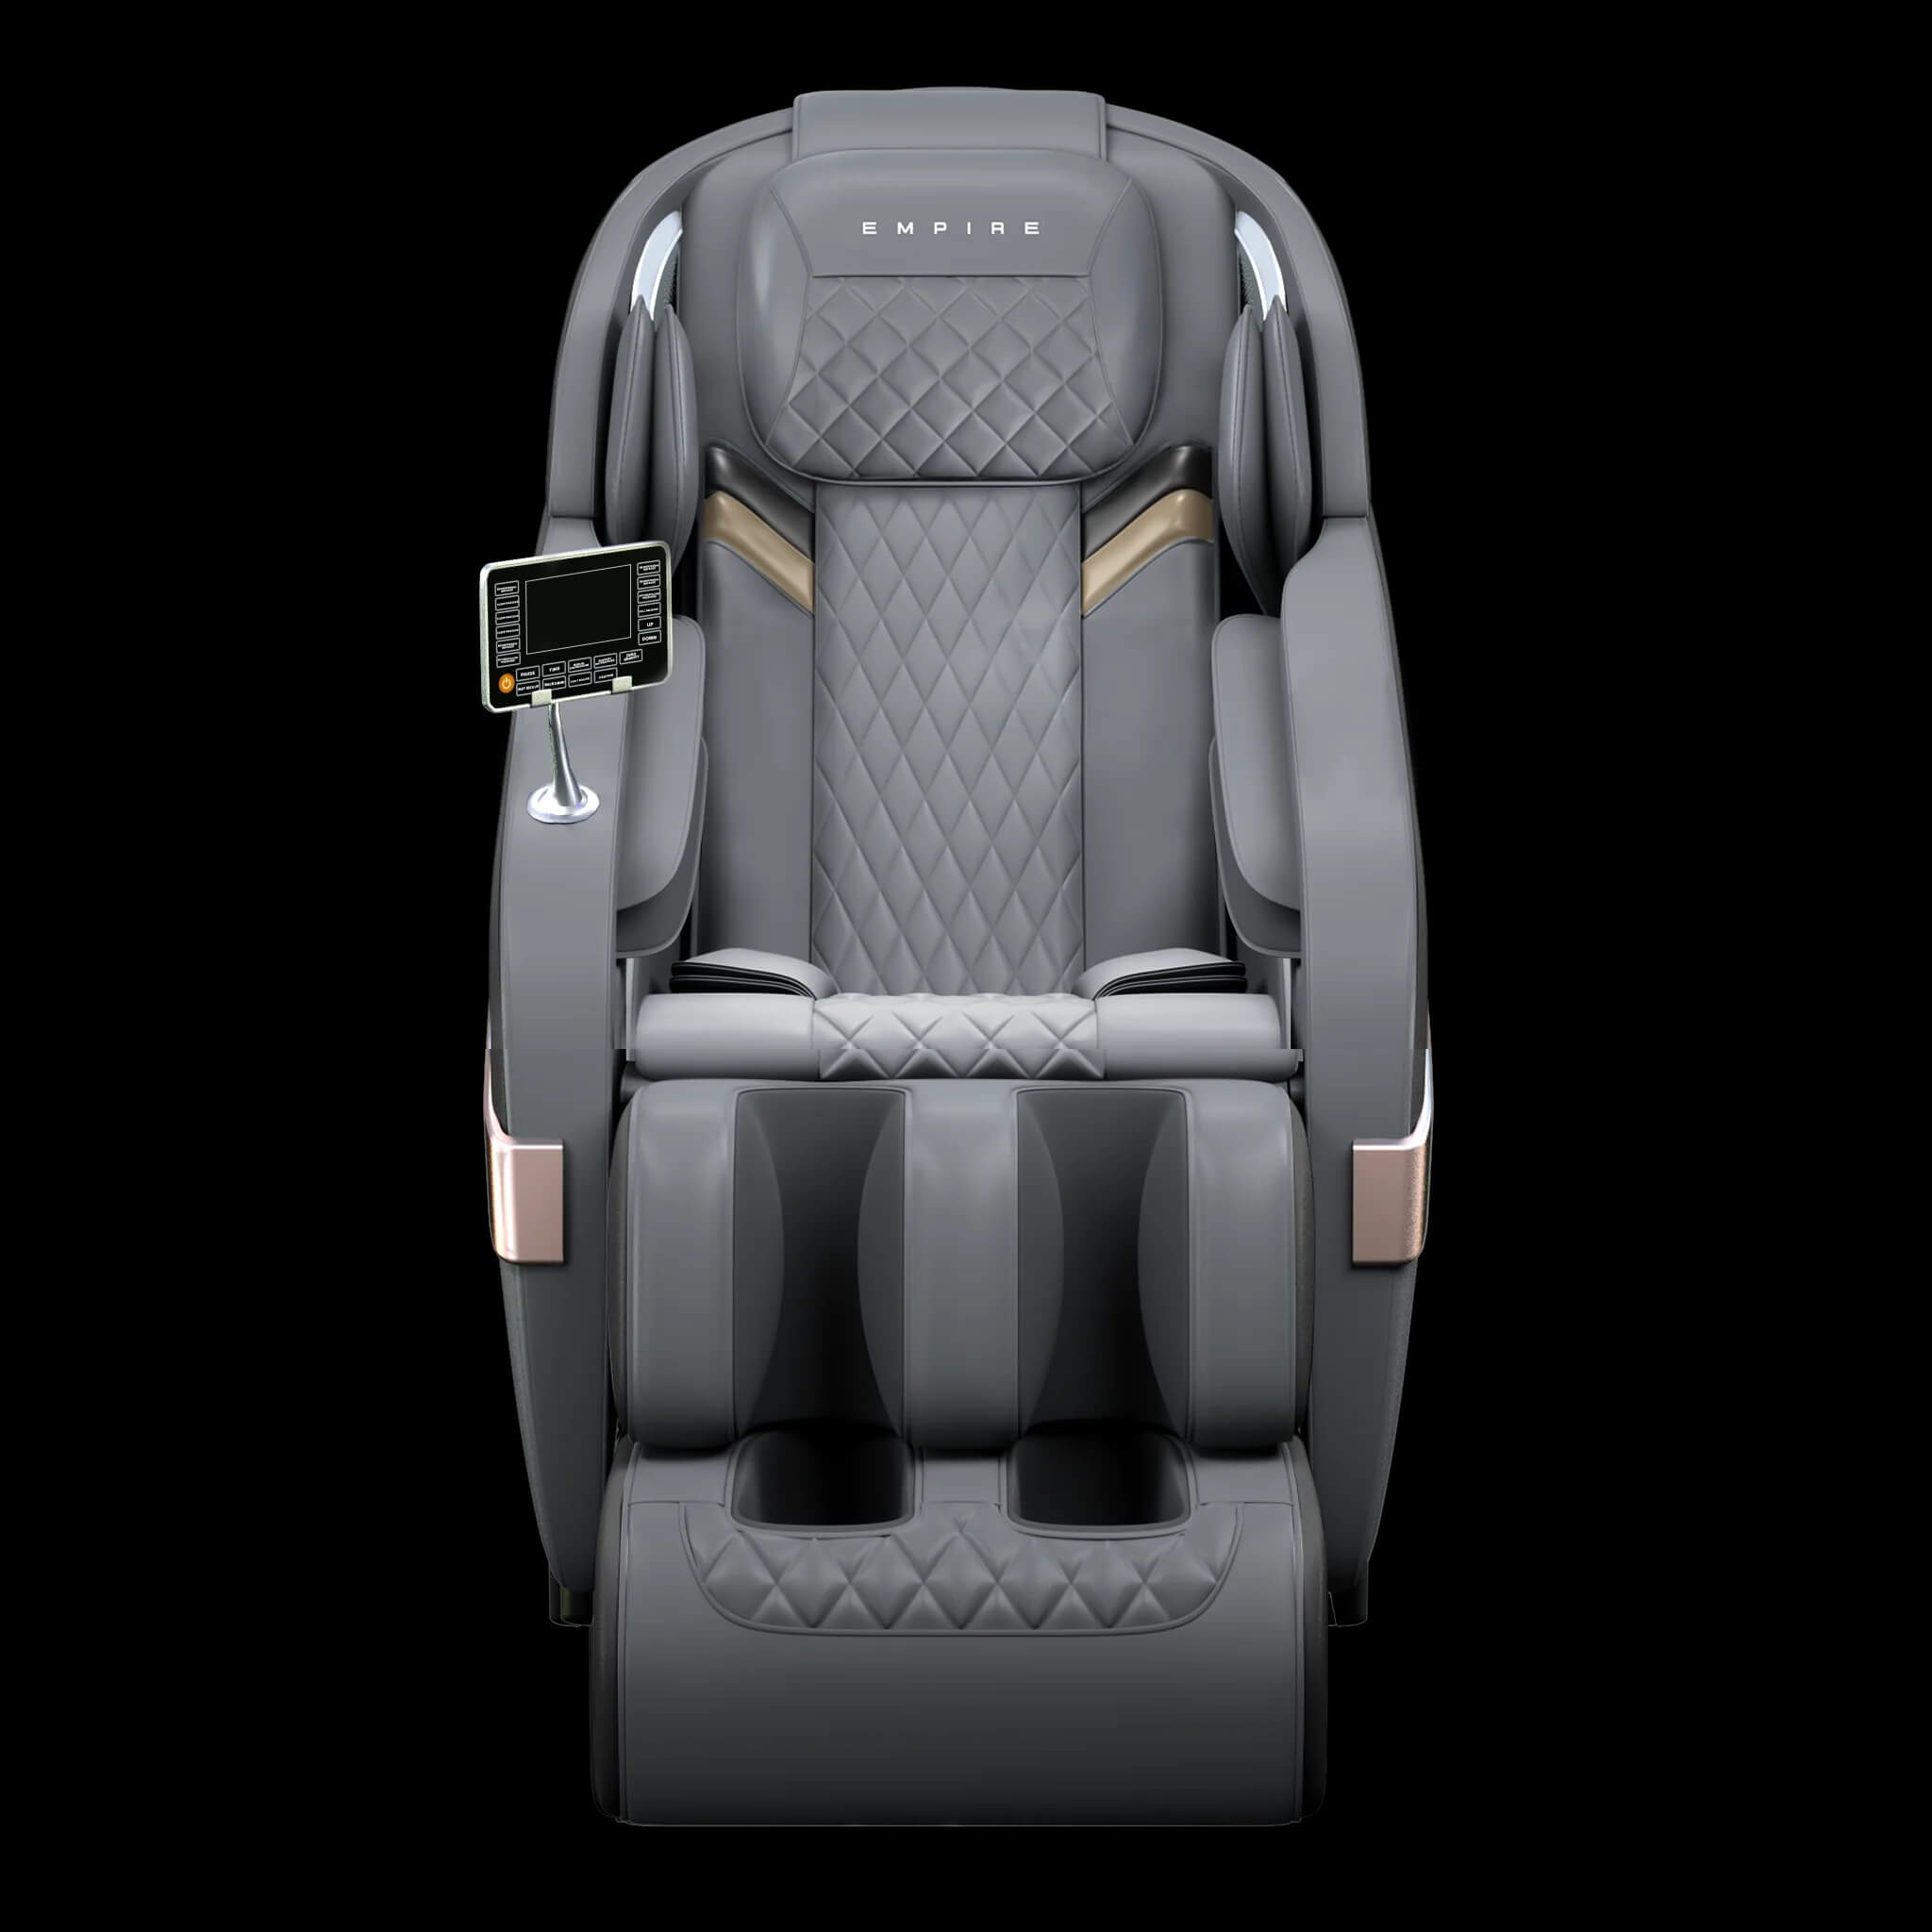 EMPIRE Premium Massage Chair